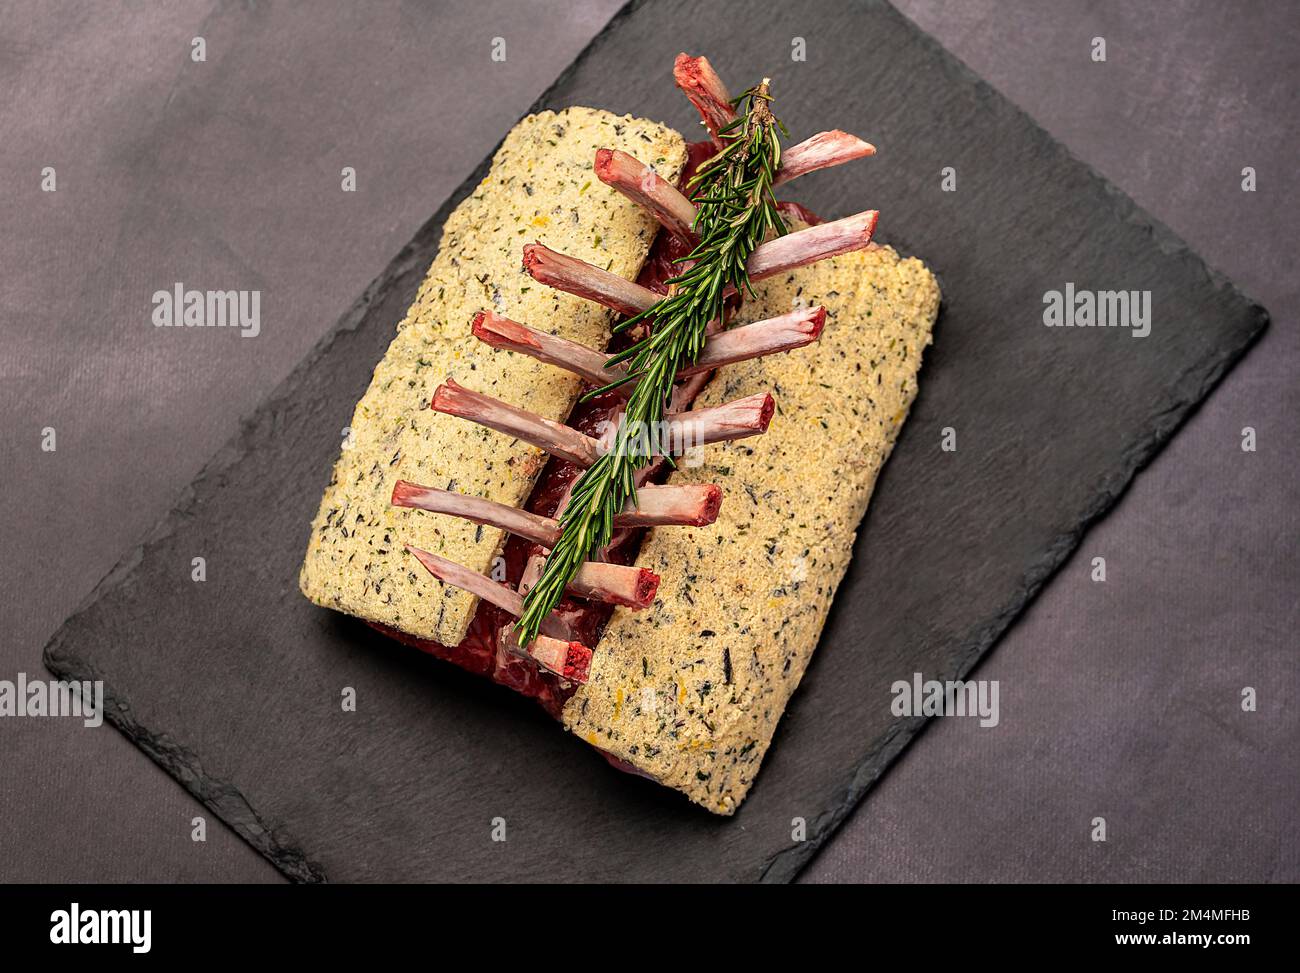 Food photography of raw lamb, fresh meat, mouton, joint, butchery, bones Stock Photo